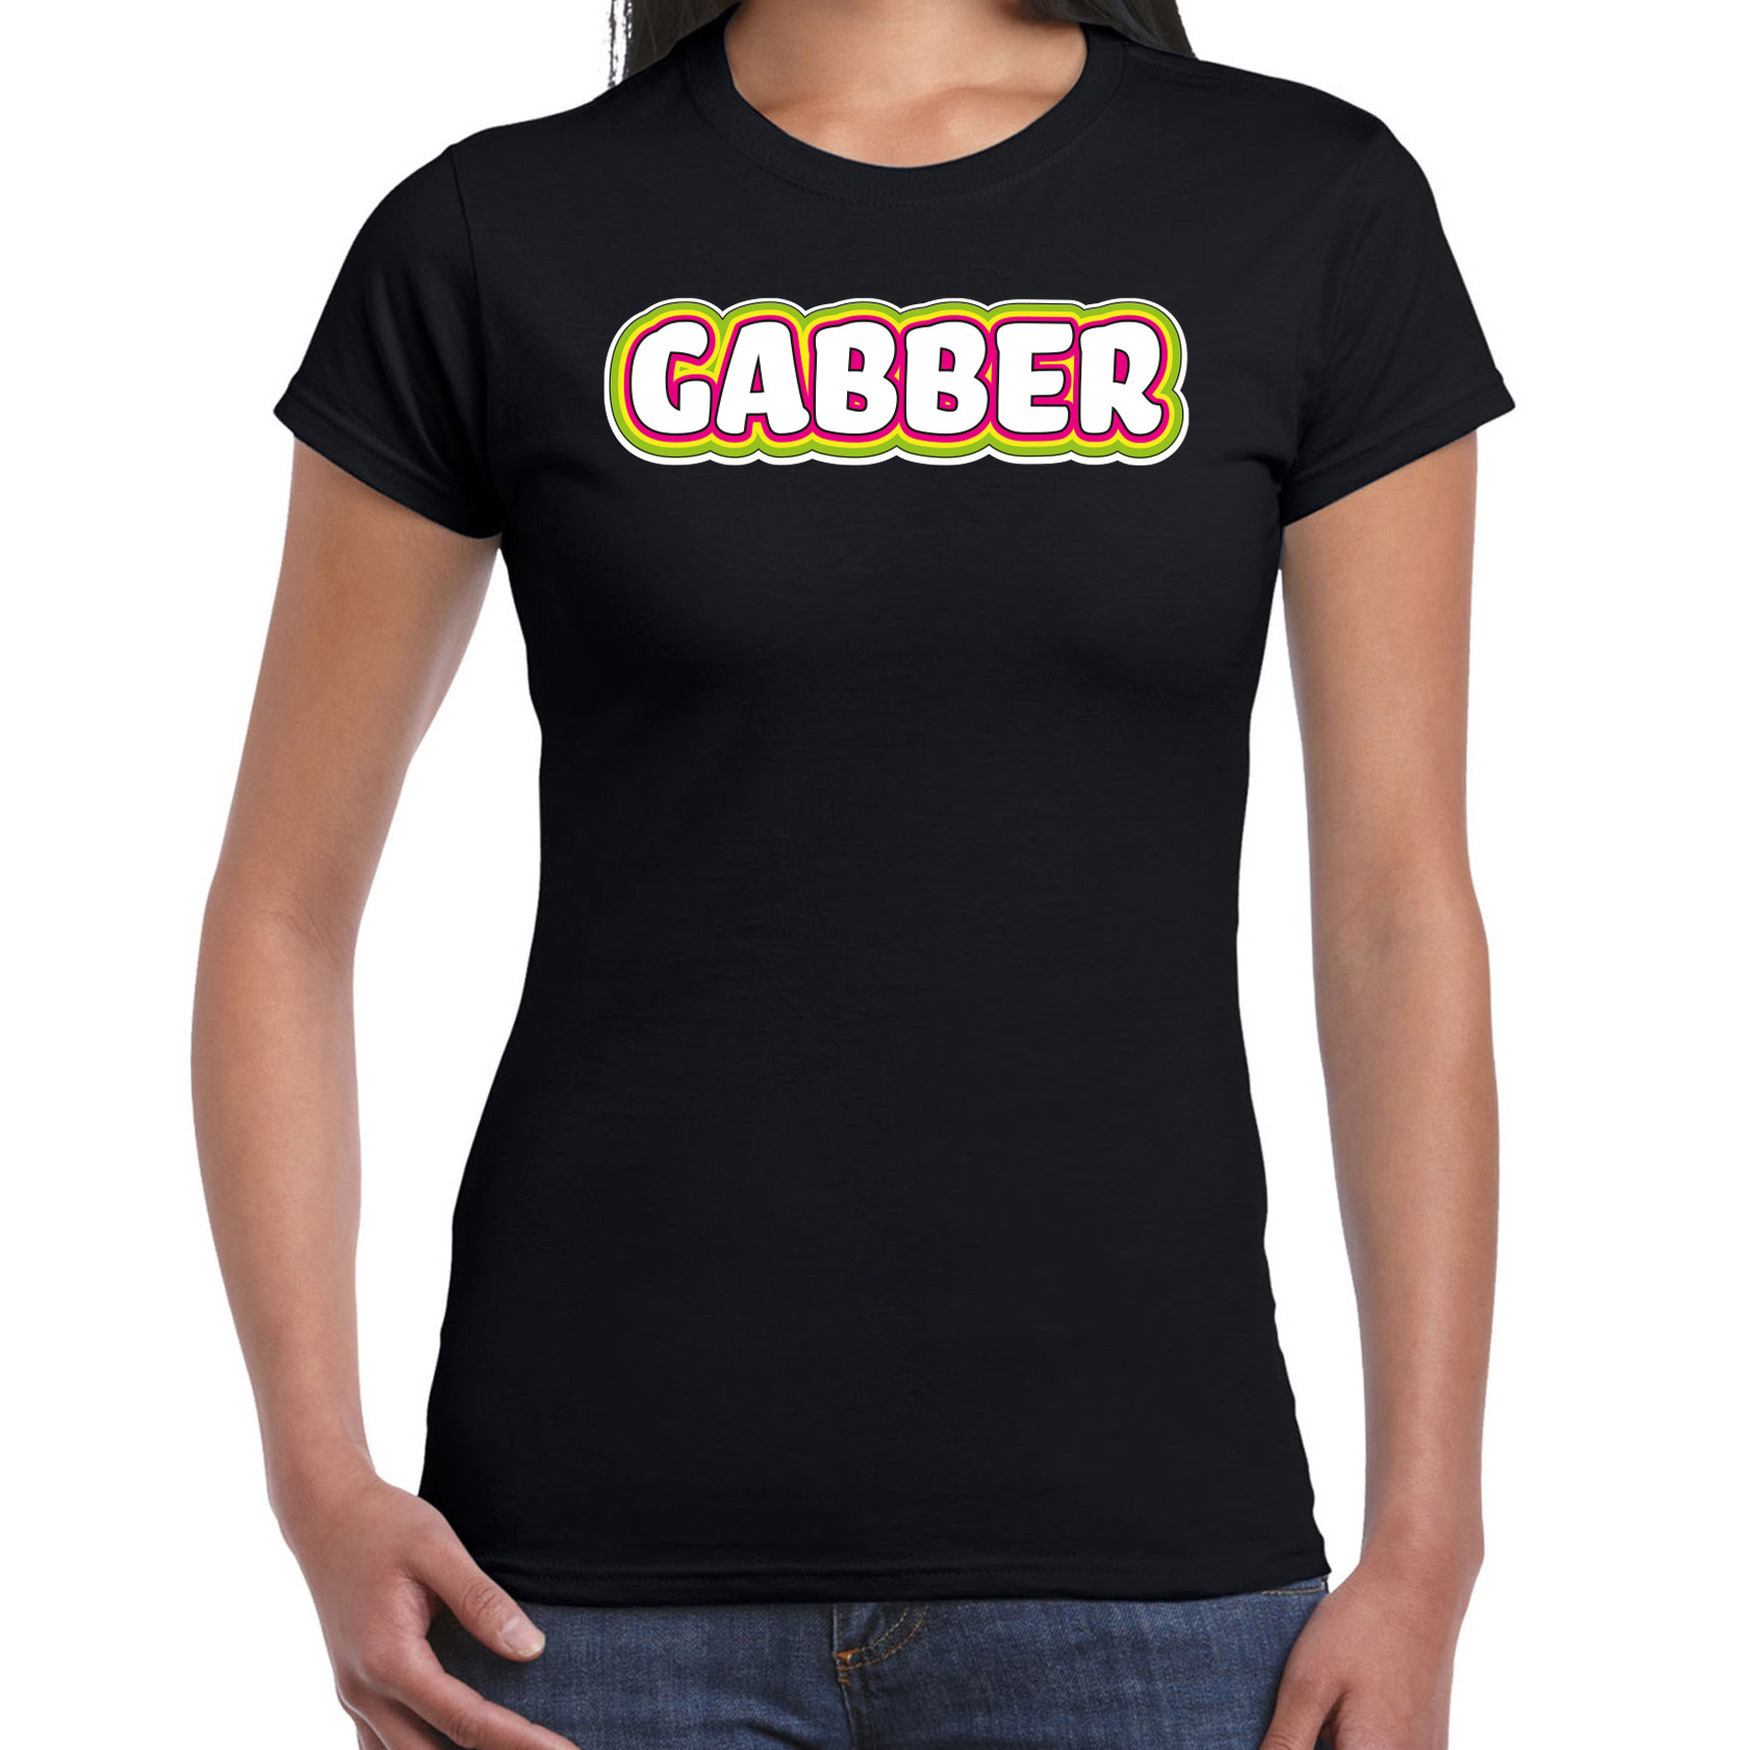 Verkleed t-shirt voor dames gabber zwart foute party-carnaval vriend-maat muziek